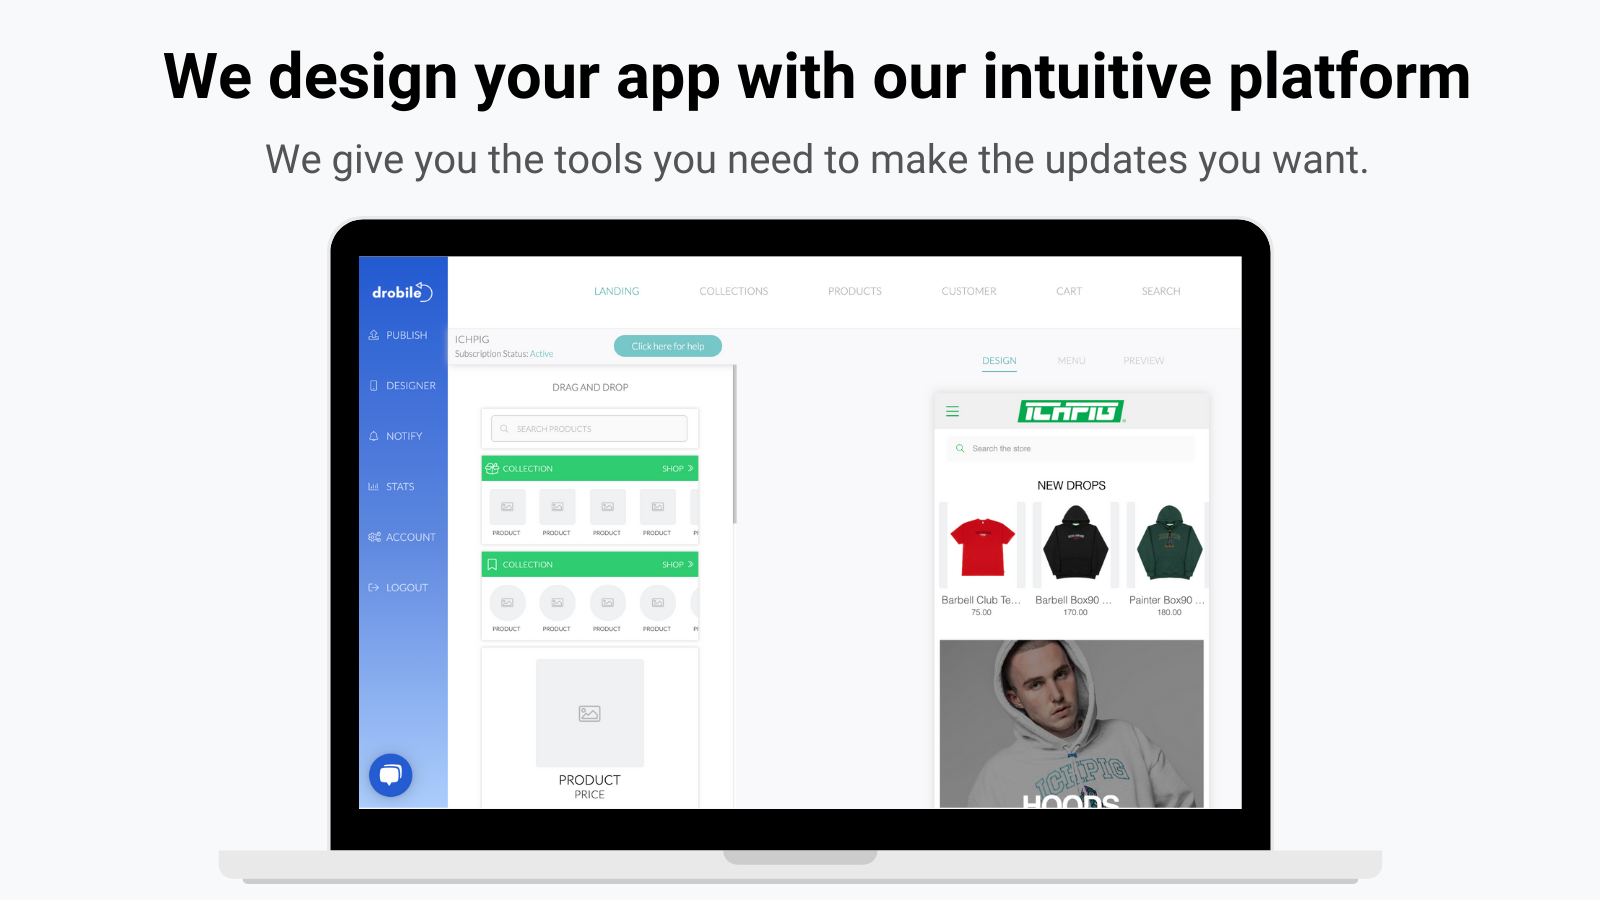 We design your beautiful app